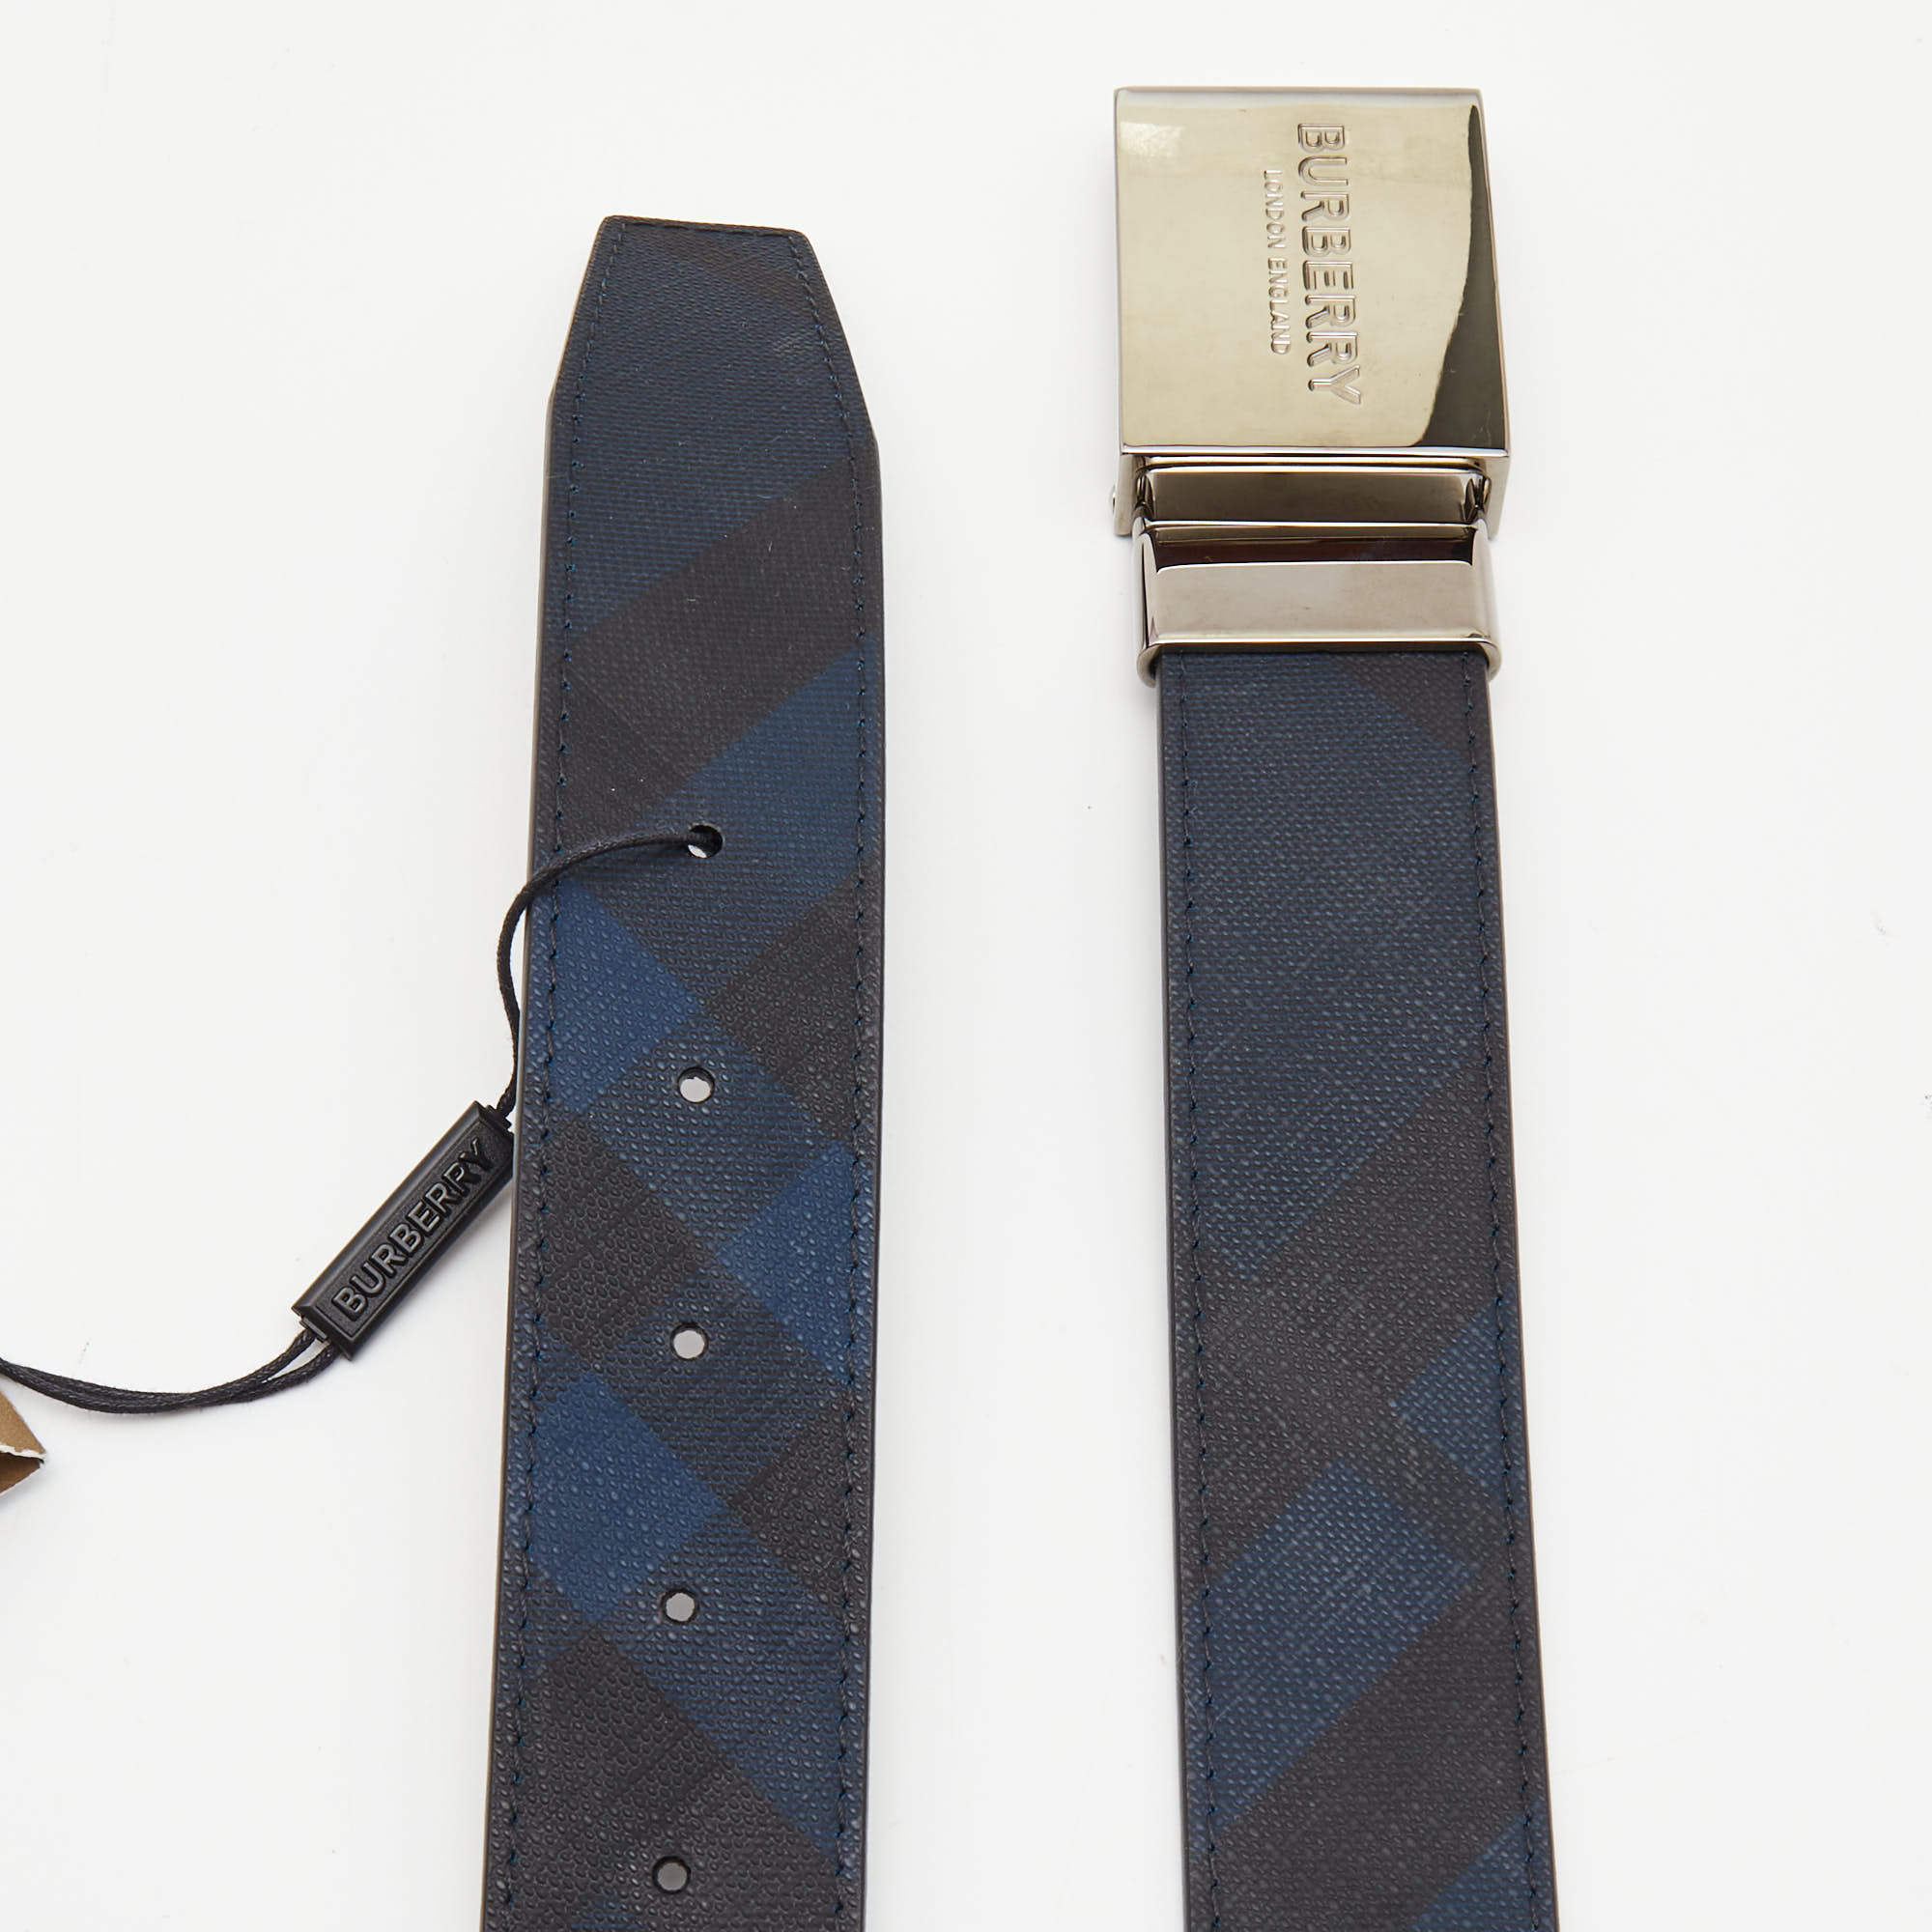 Cloth belt Burberry Black size 85 cm in Cloth - 33356000